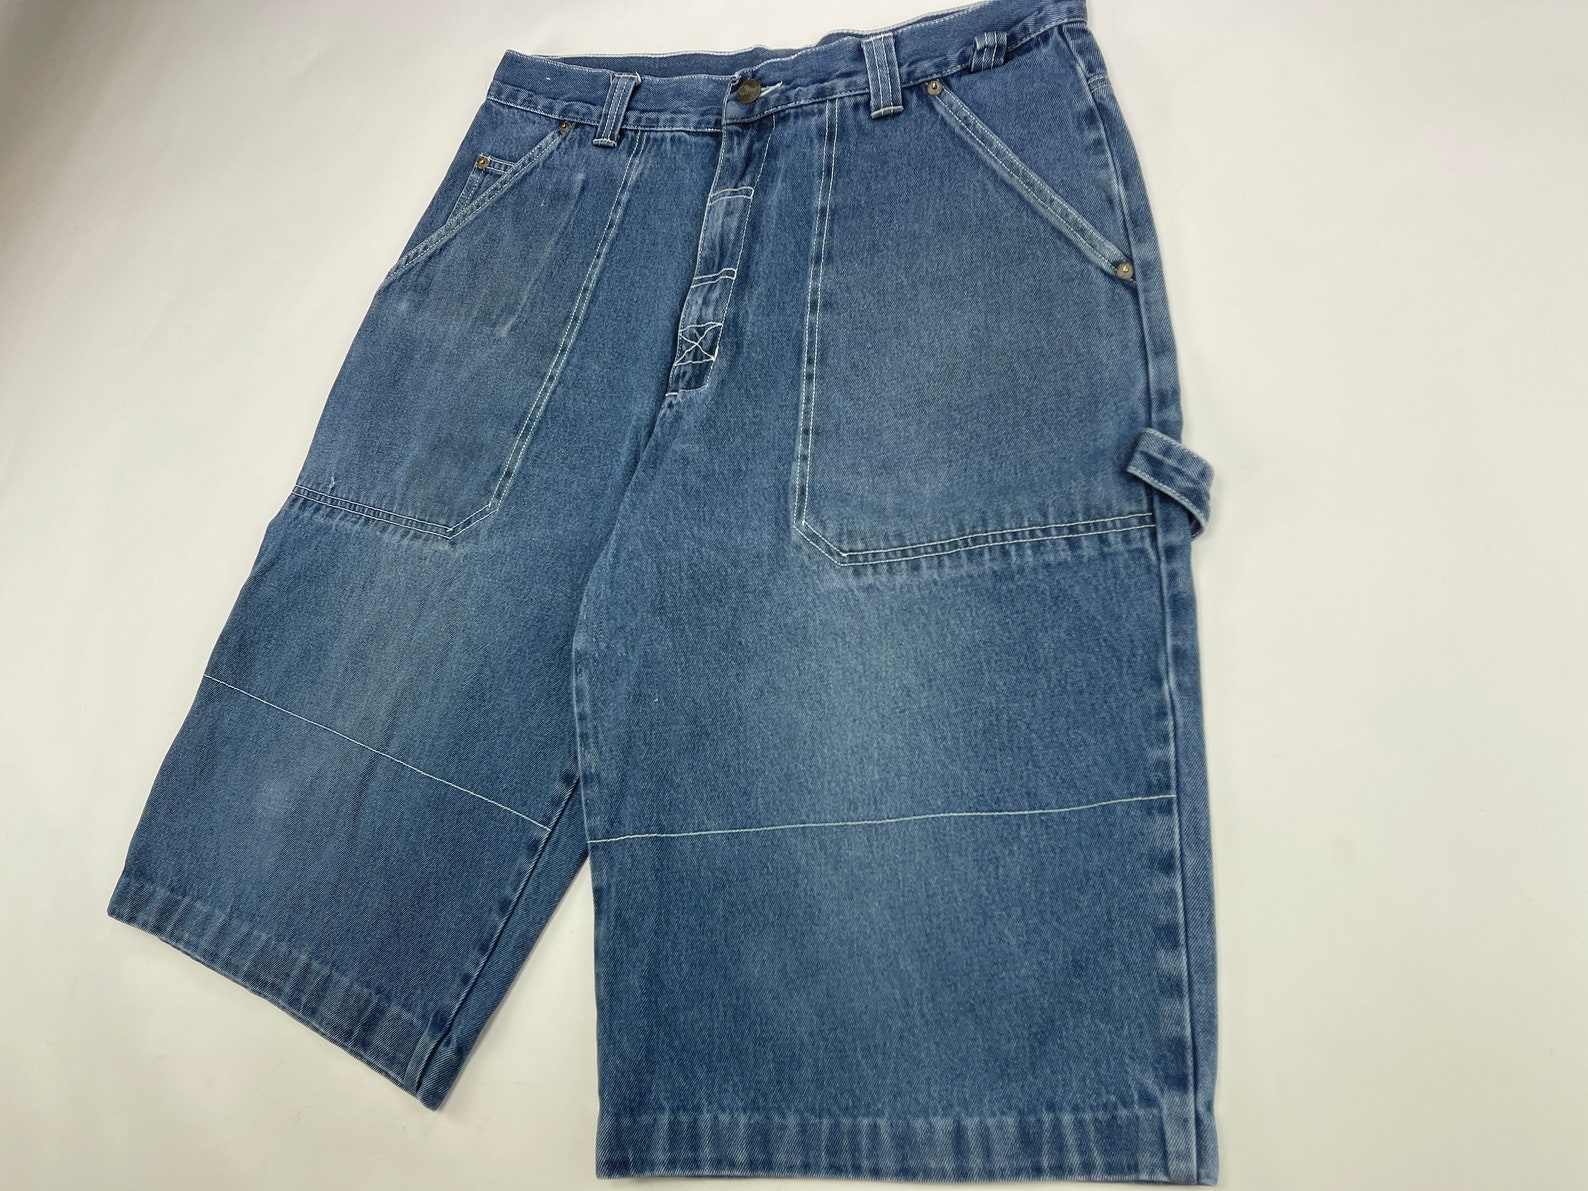 Fishbone Shorts Blue Vintage Jeans 90s Hip Hop Clothing - Etsy